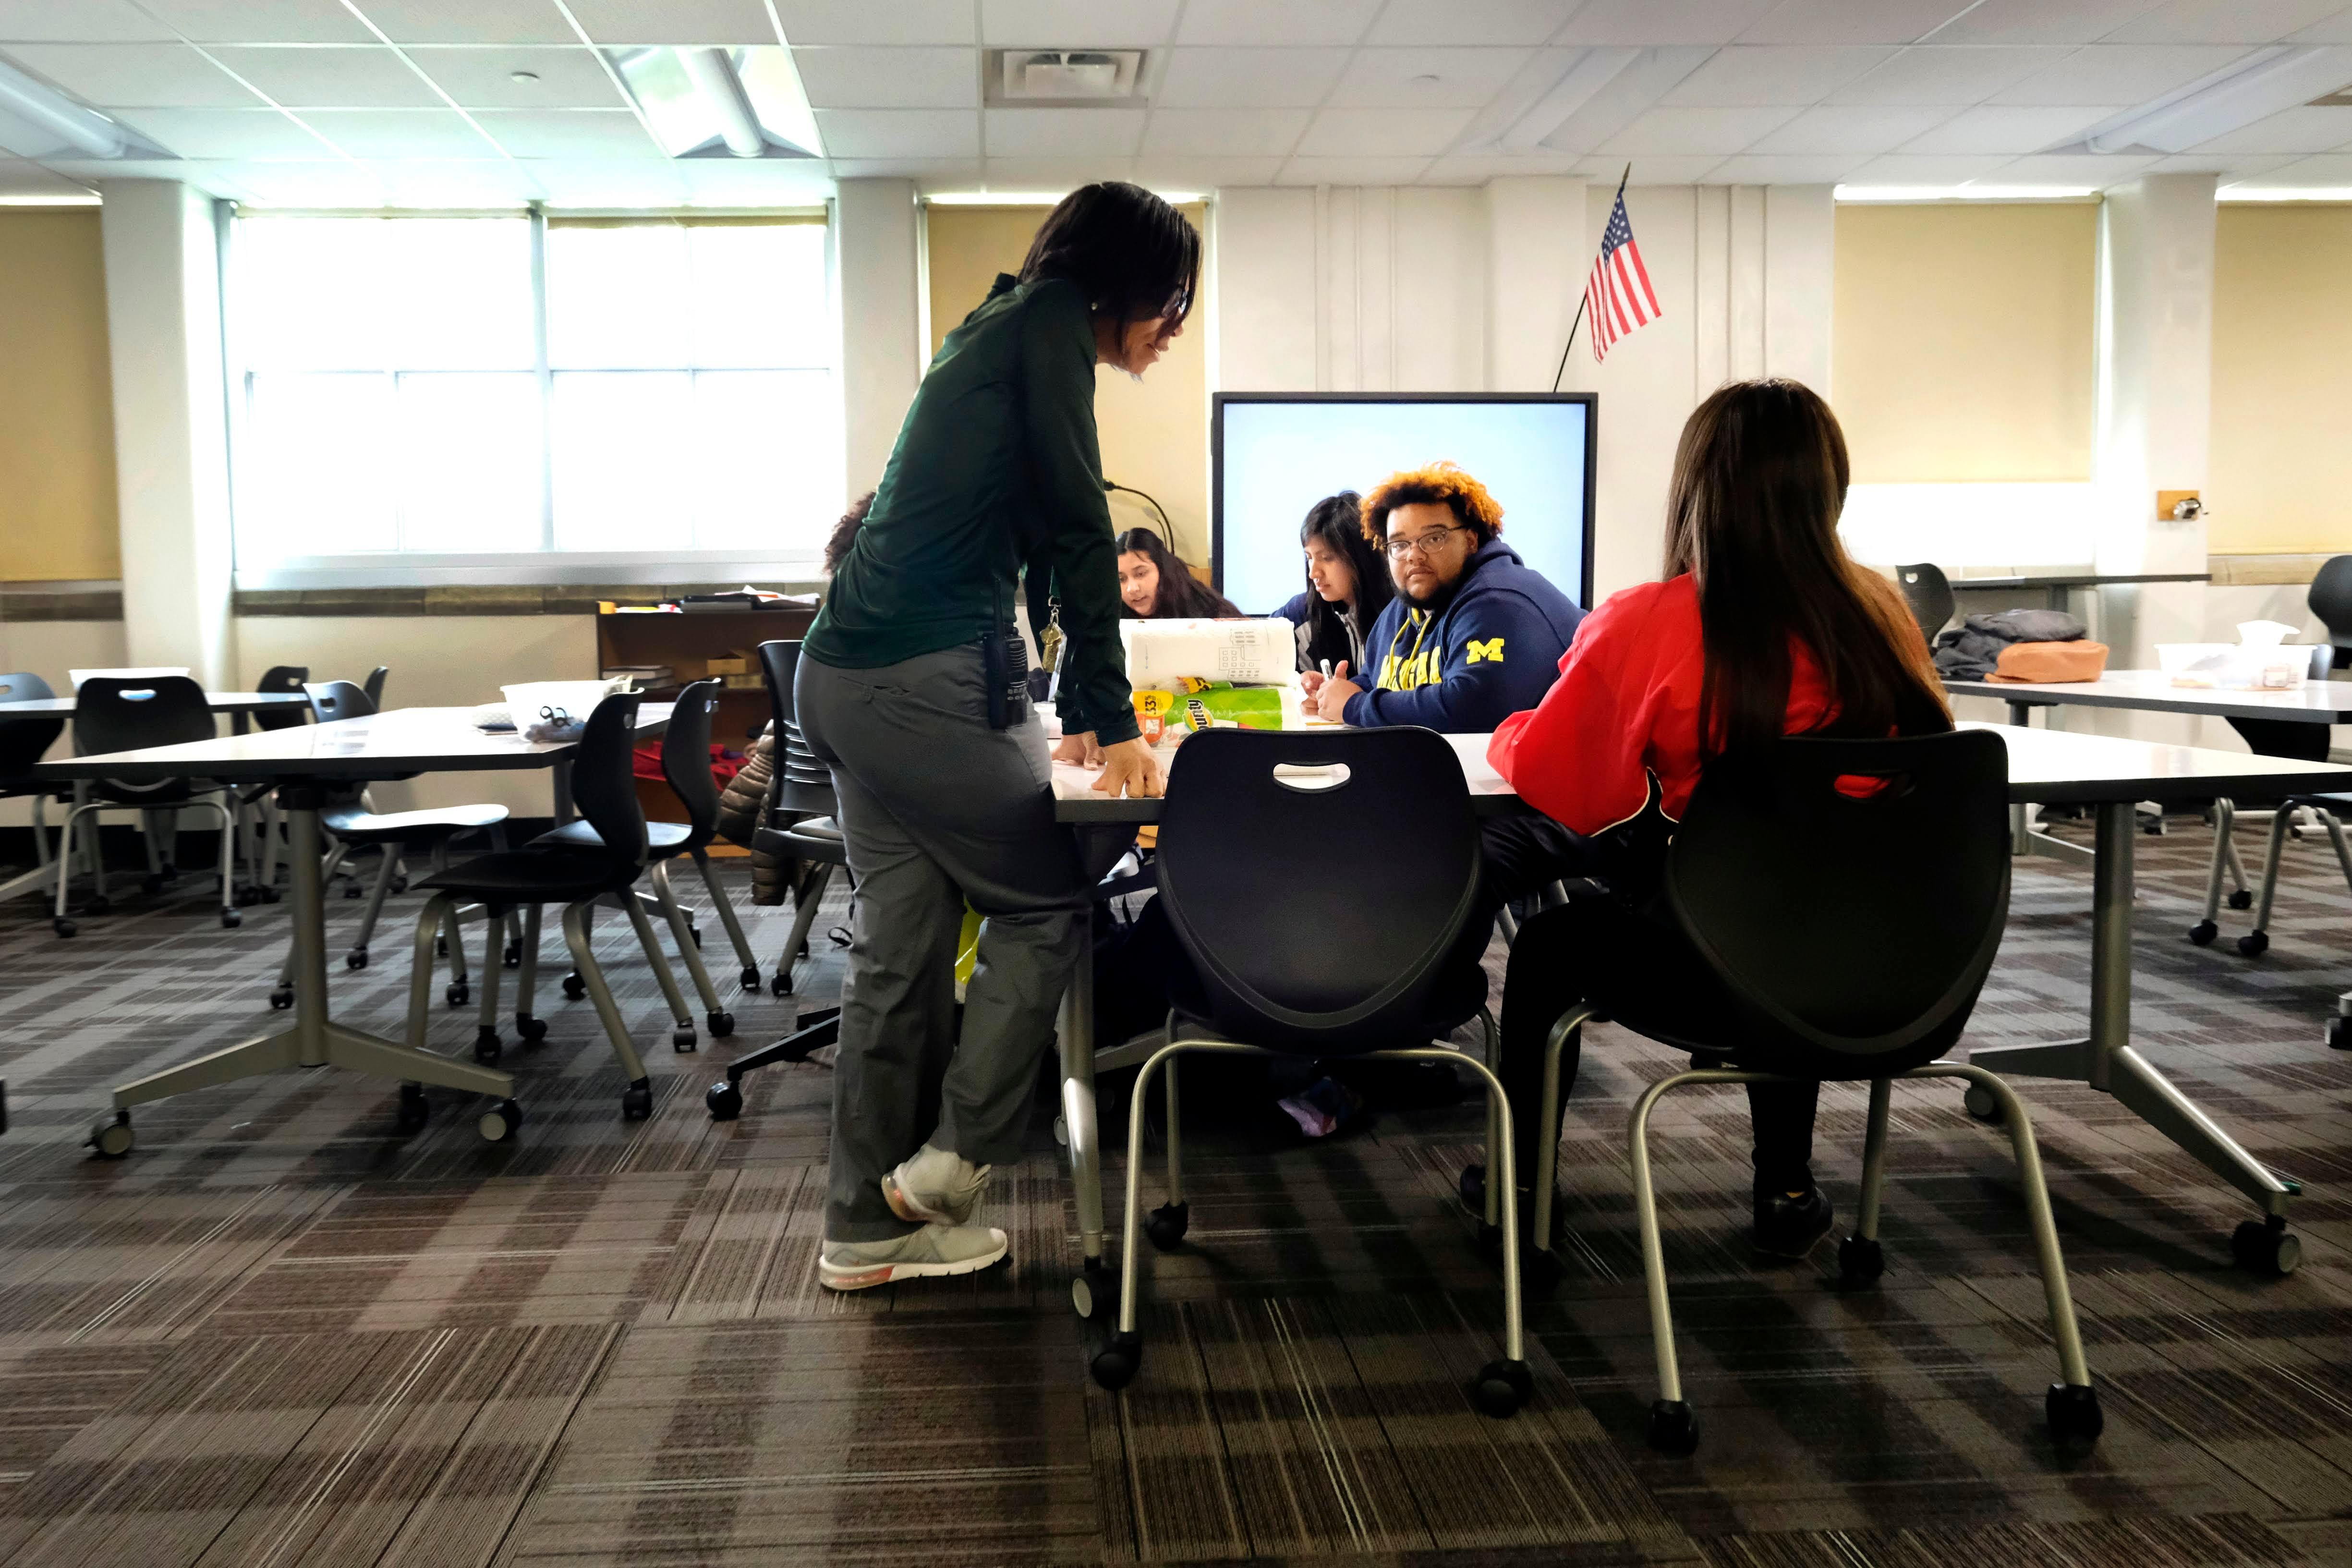 A teacher talks with students inside a classroom at Crispus Attucks High School, a public school in Indianapolis, Indiana in April 2019.